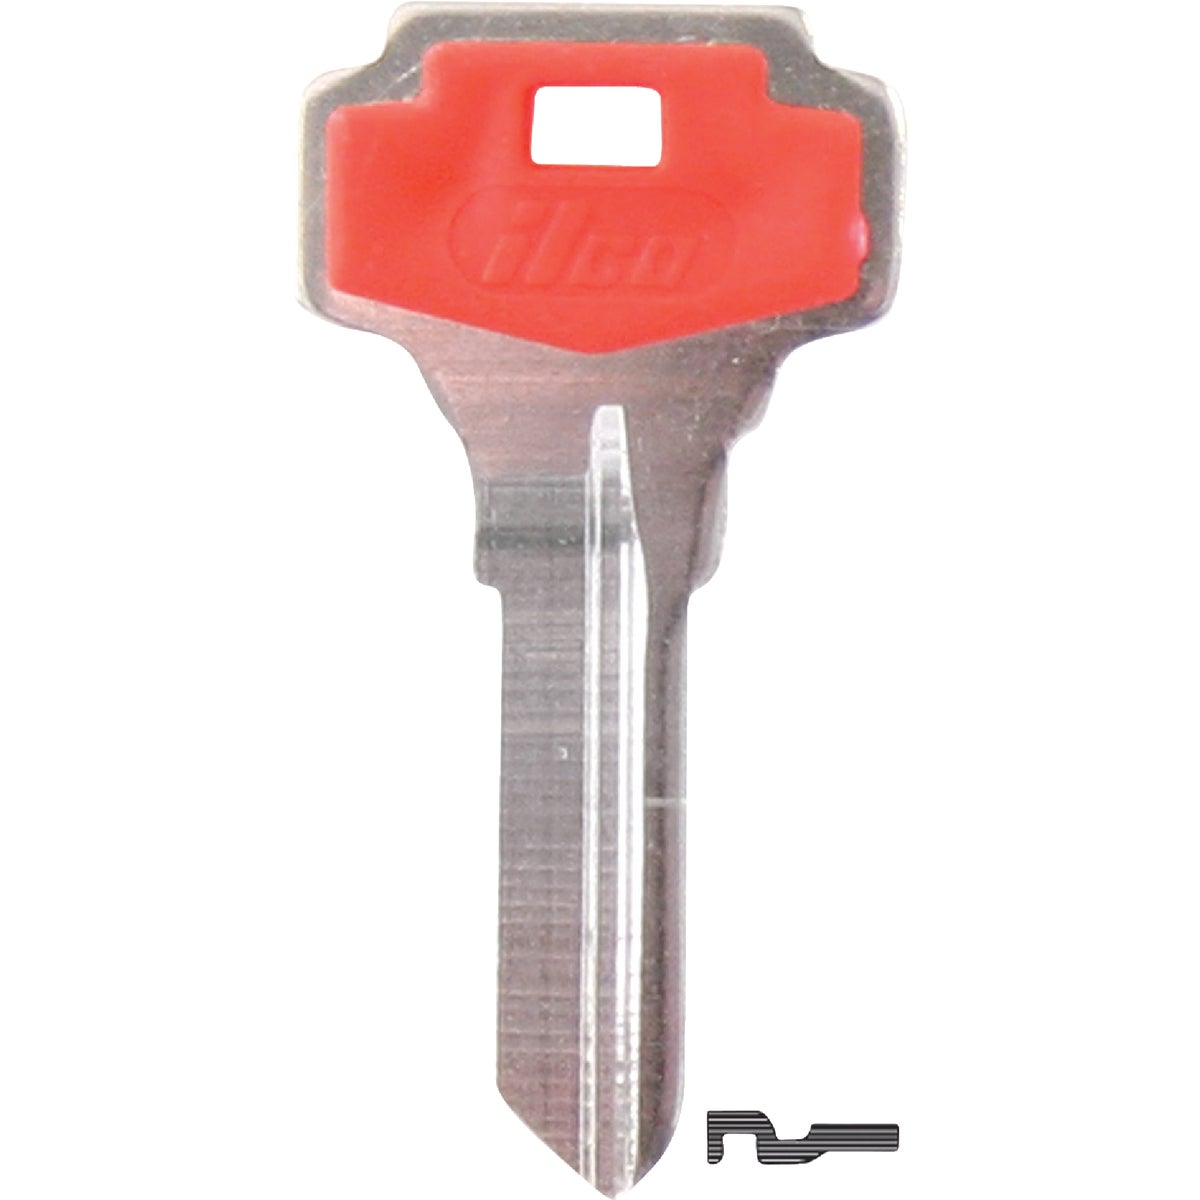 Item 235374, Nickel-plated key blank with plastic insert.